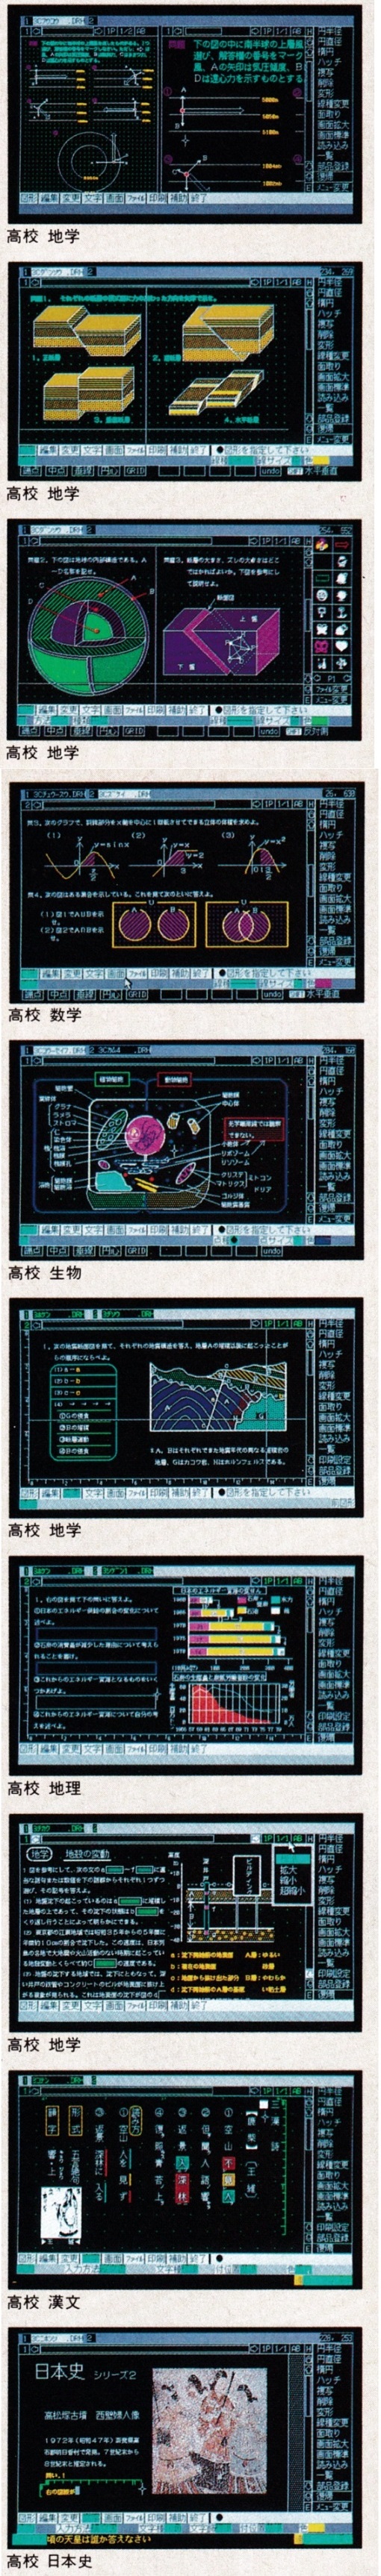 ASCII1987(03)a15花子_教材4_W510.jpg